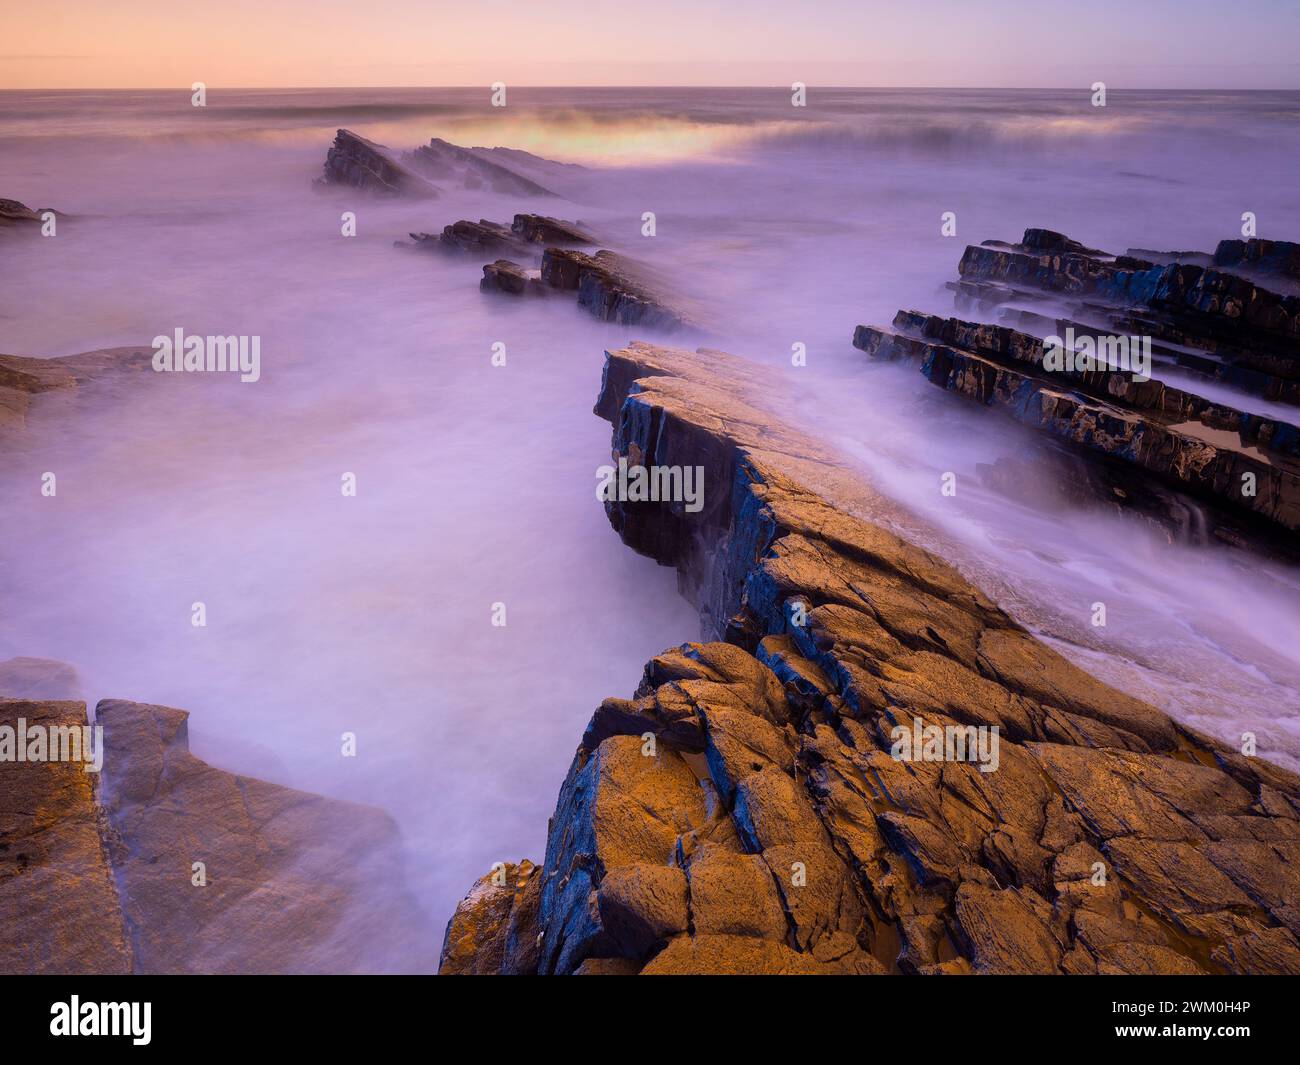 Portugal, Alentejo, Zambujeira do Mar, Long exposure of rocky beach at dusk Stock Photo